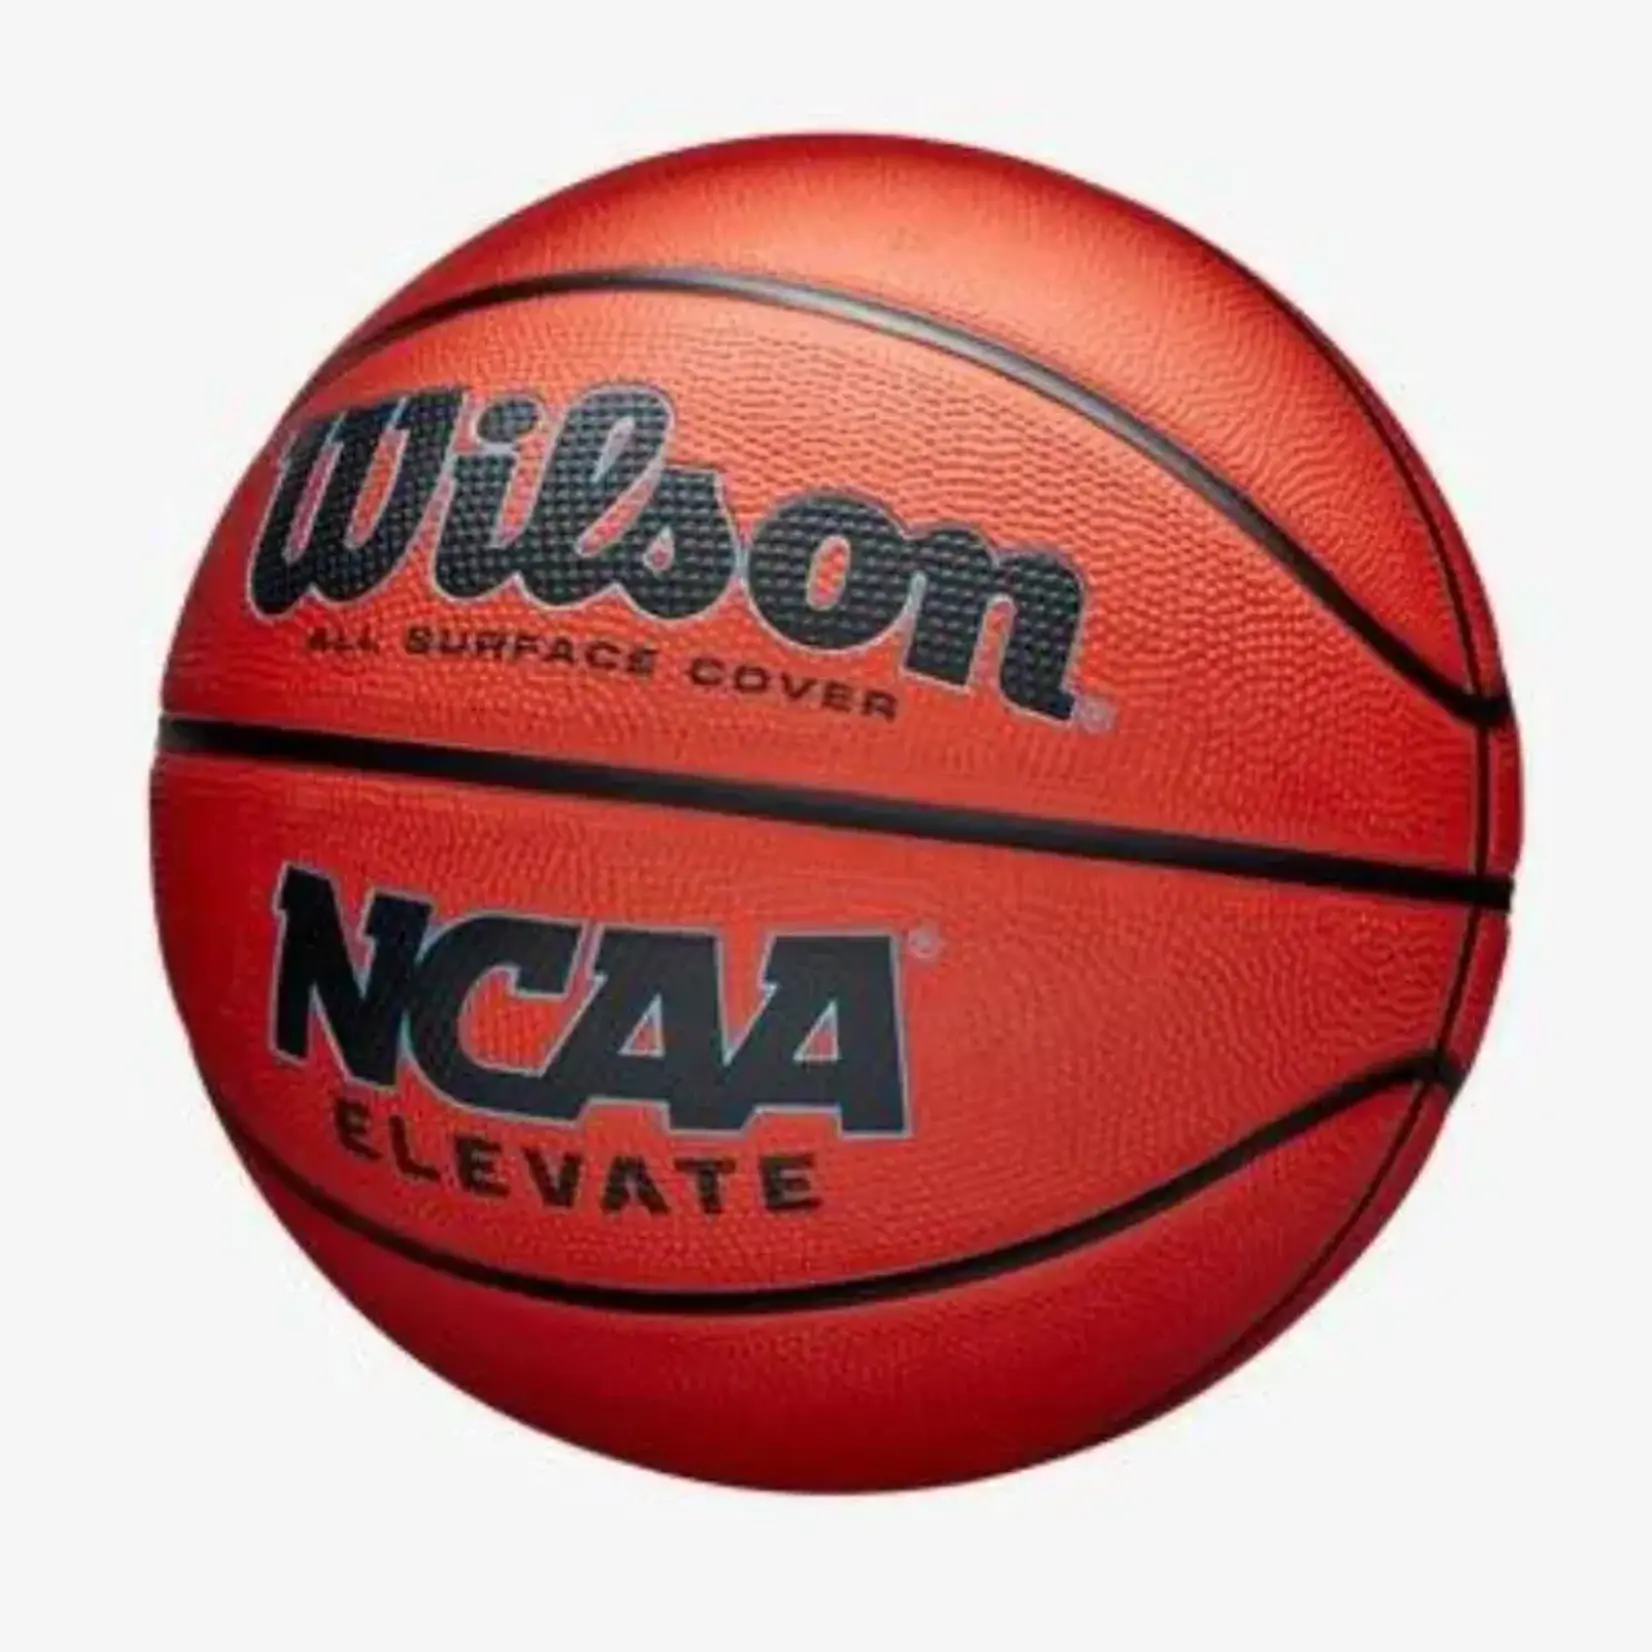 Wilson Wilson Basketball, NCAA Elevate, Size 7